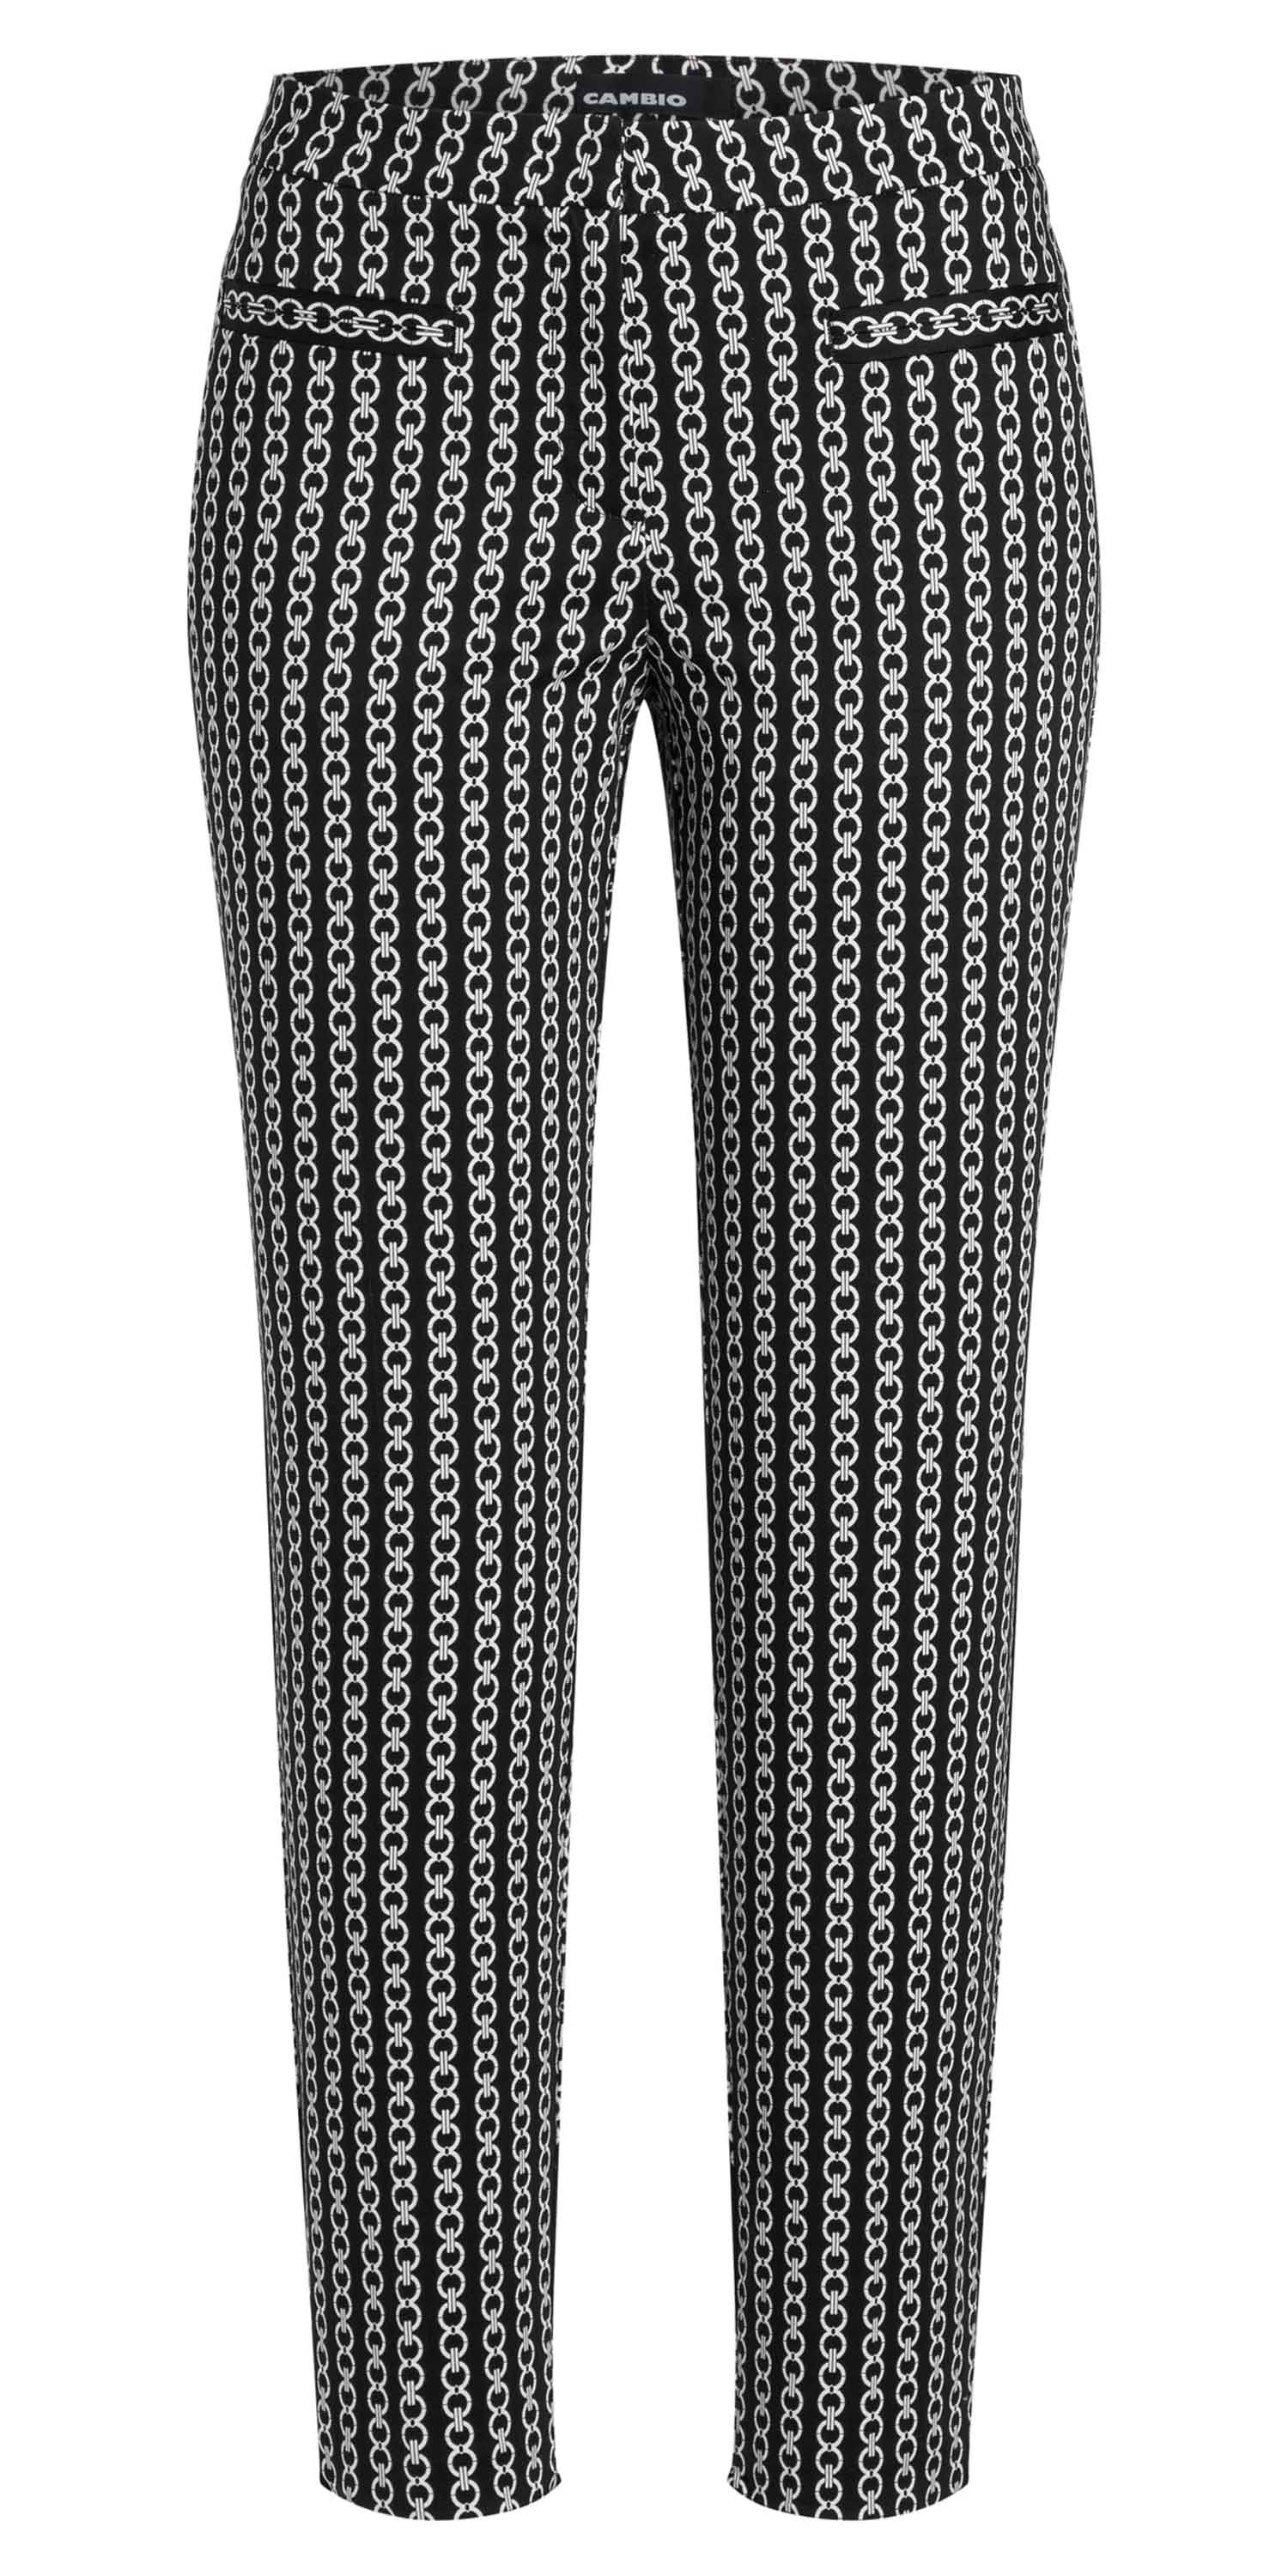 Cambio trousers RAFERTY 8707 0374-00 Black by Penninkhoffashion.com